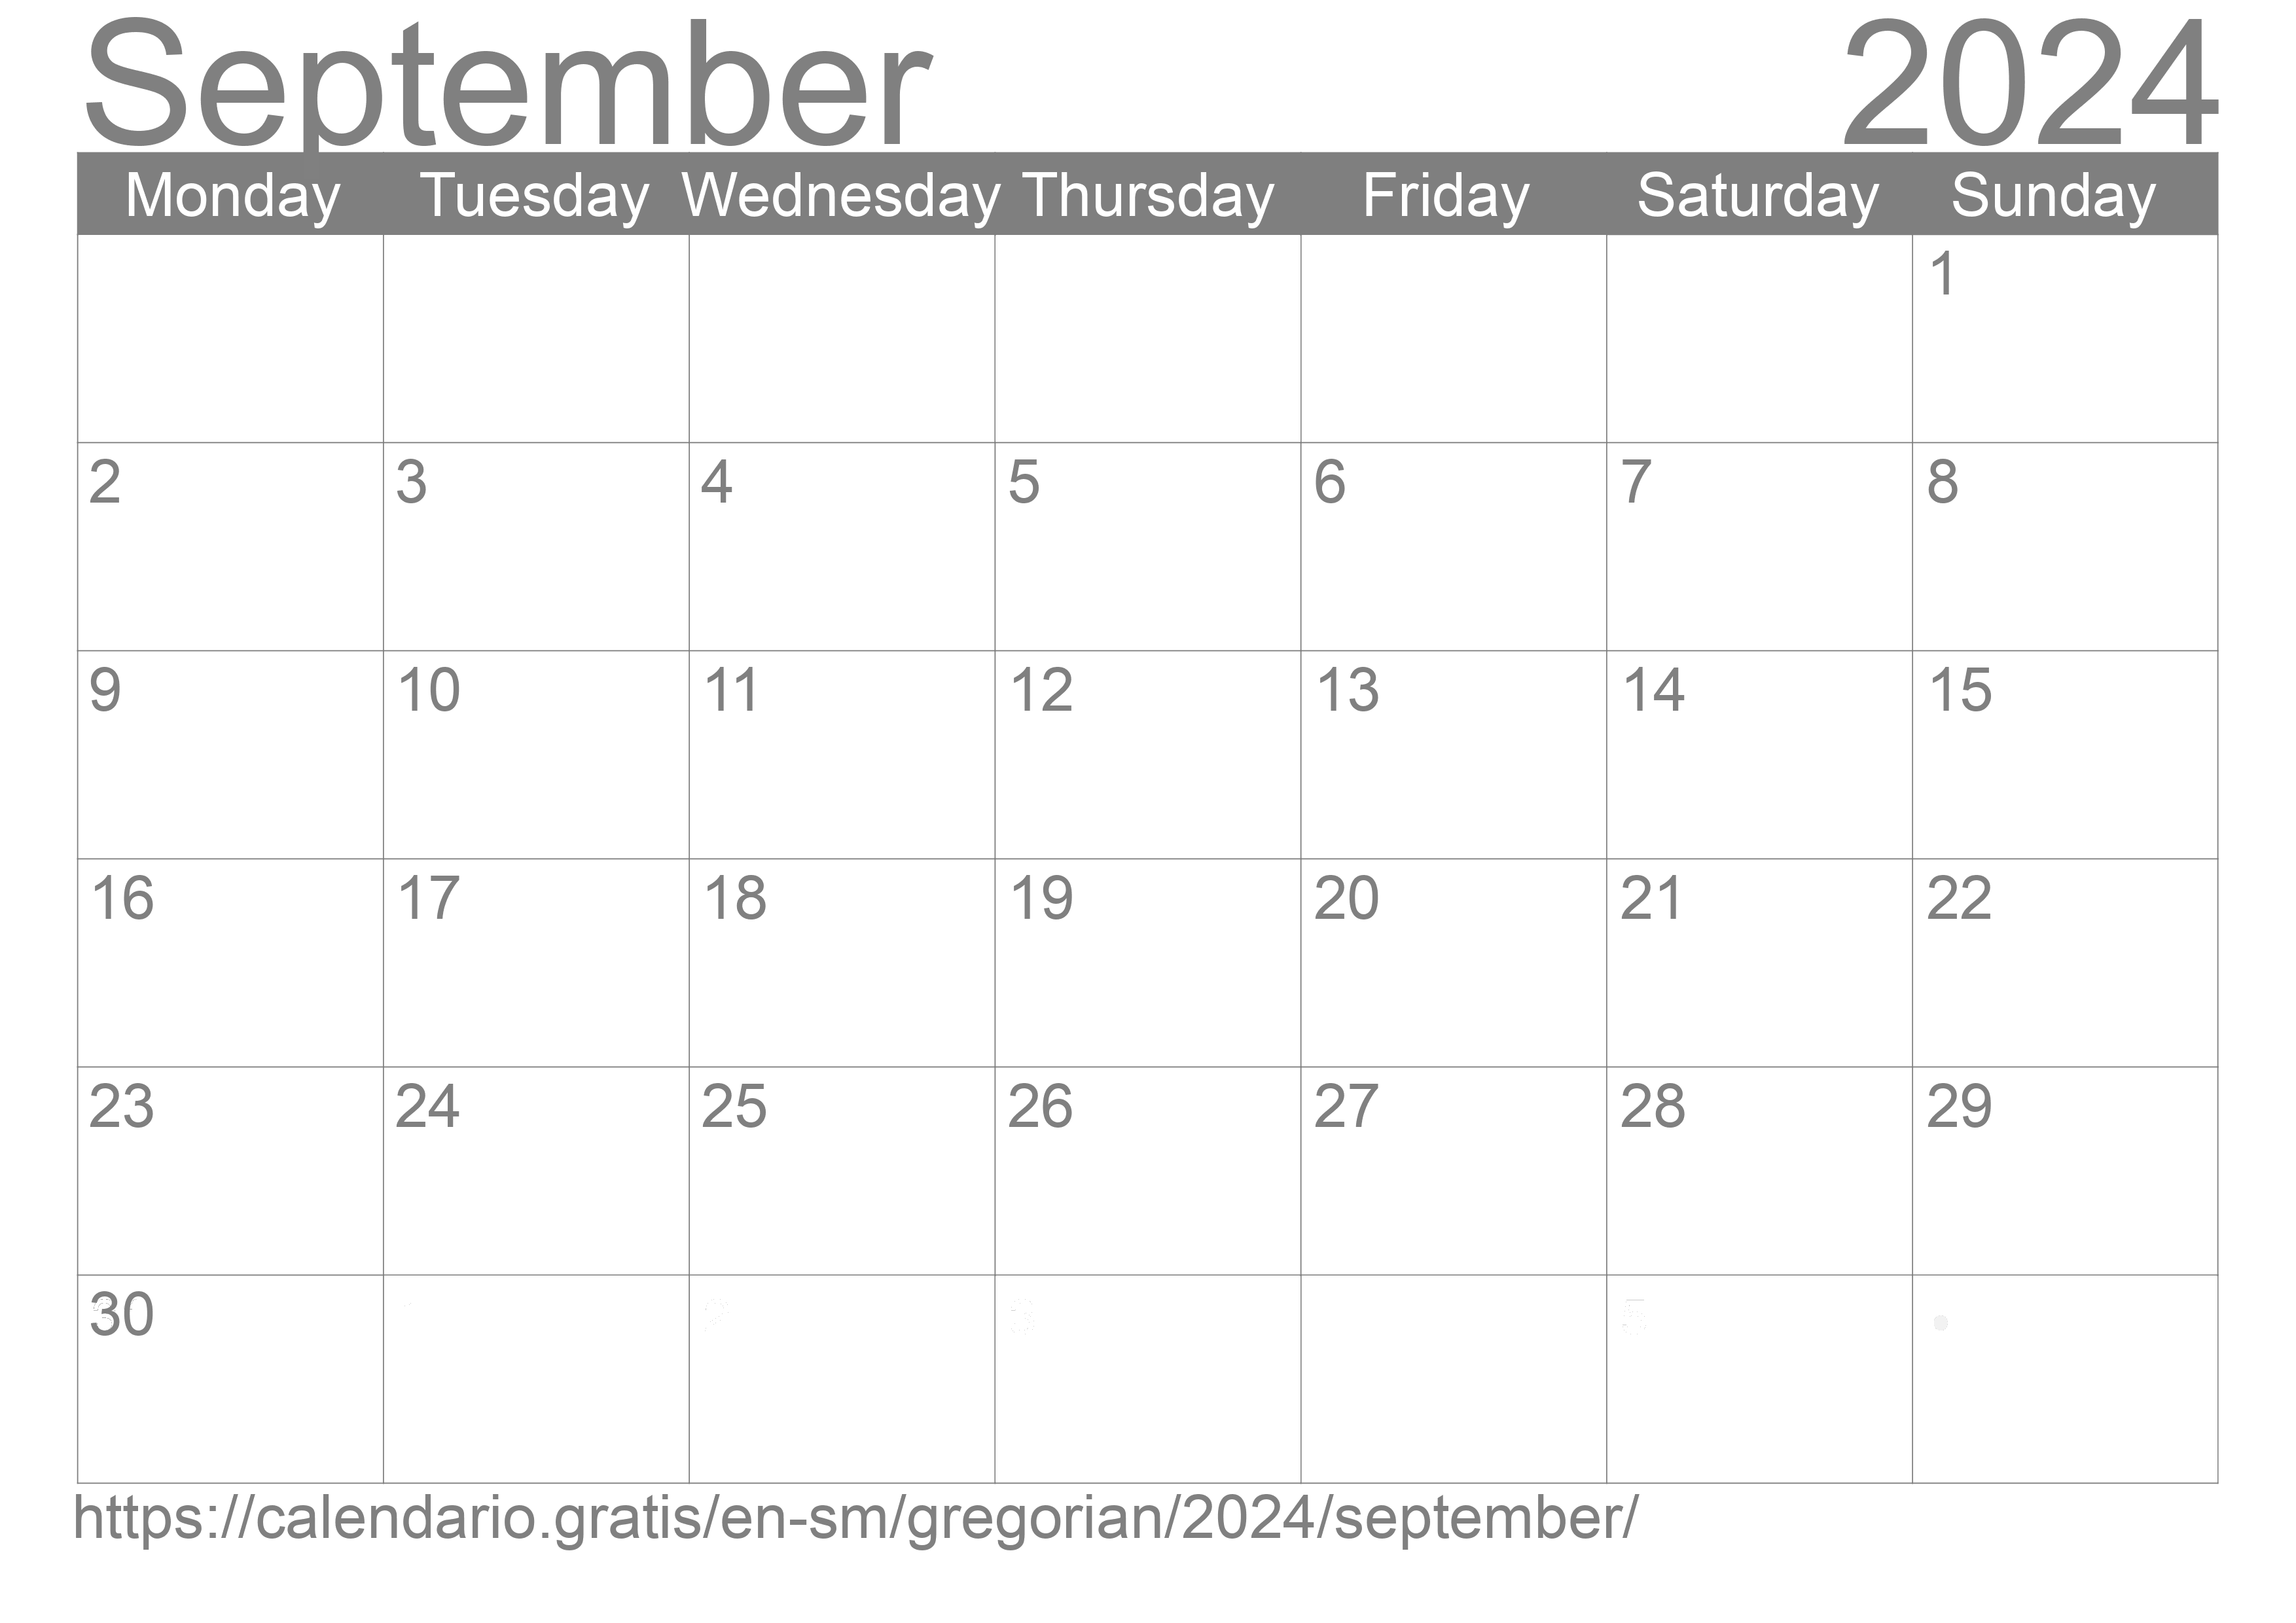 Calendar September 2024 to print